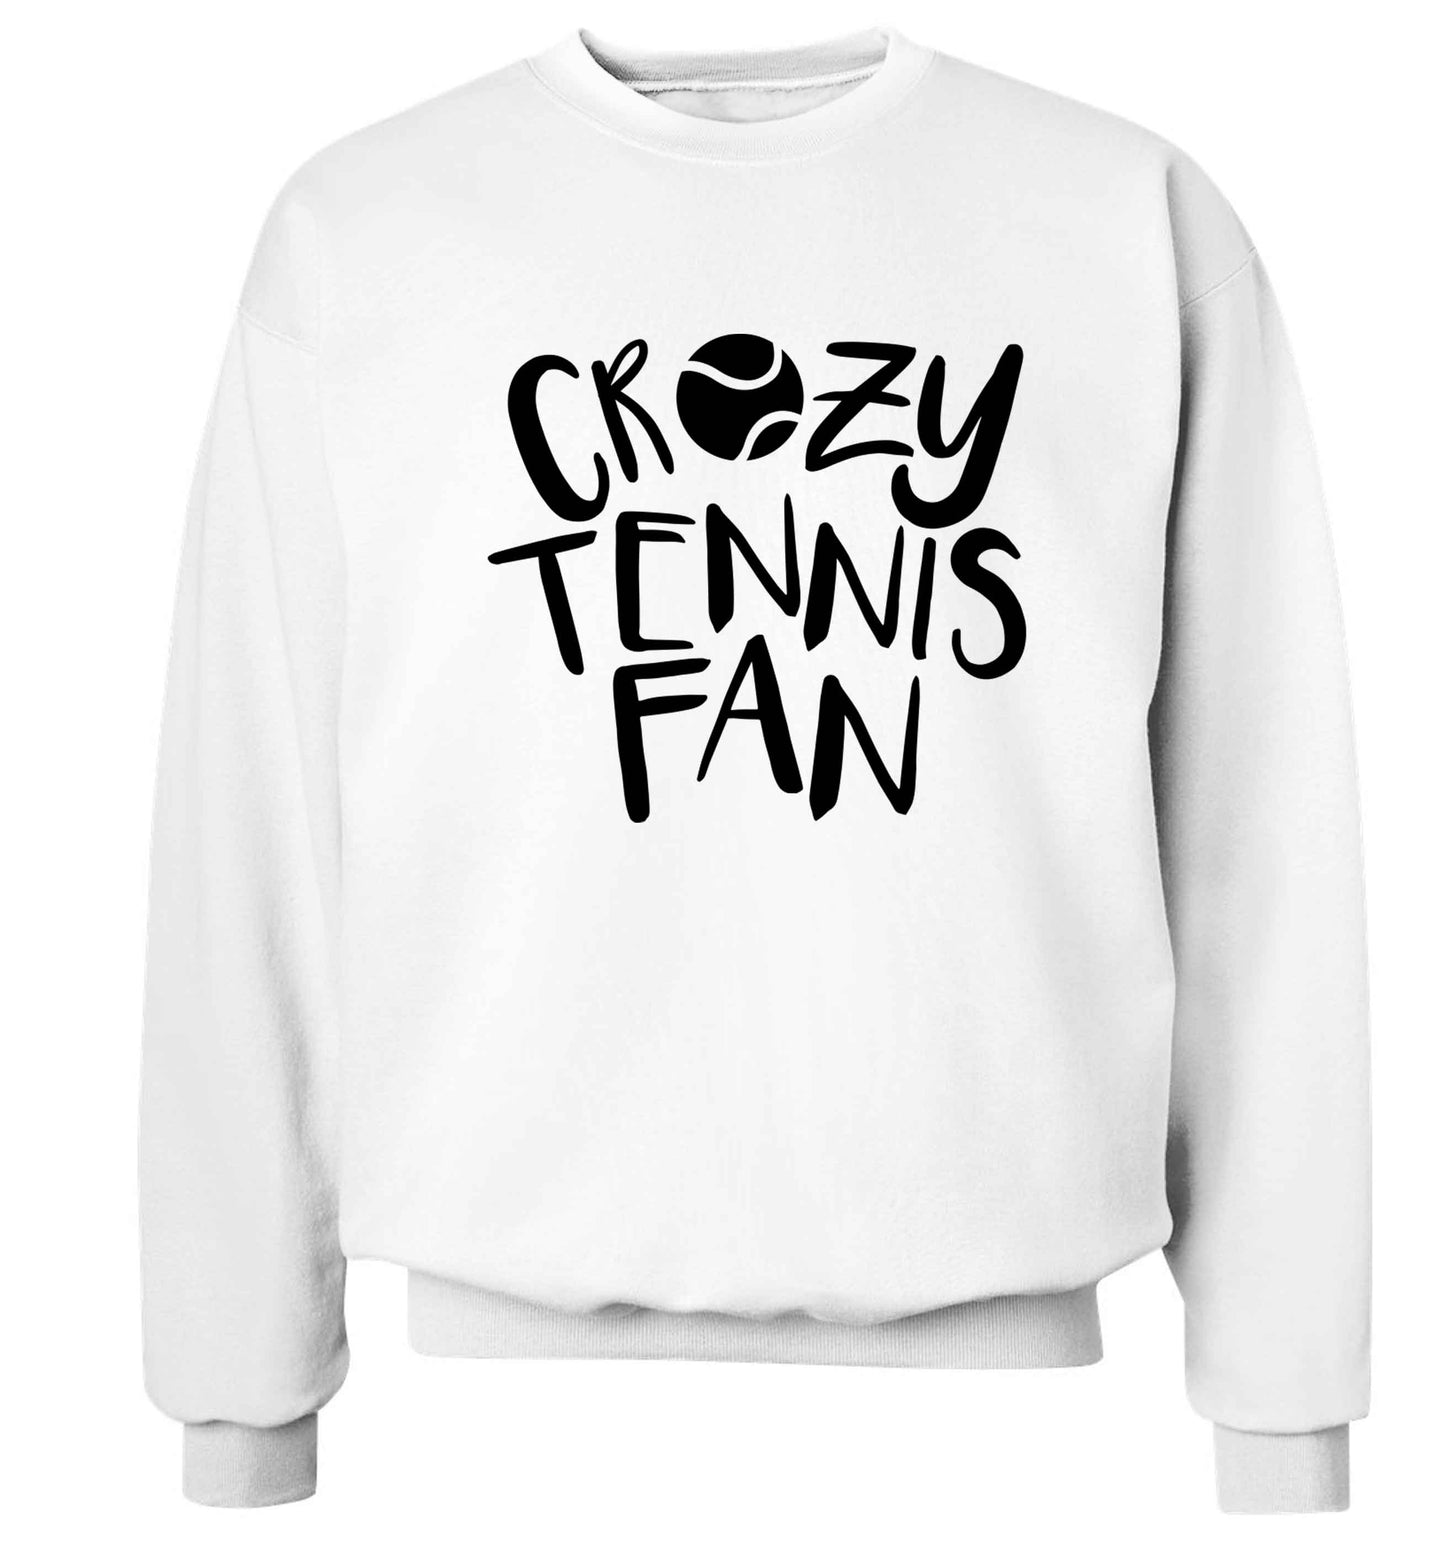 Crazy tennis fan Adult's unisex white Sweater 2XL